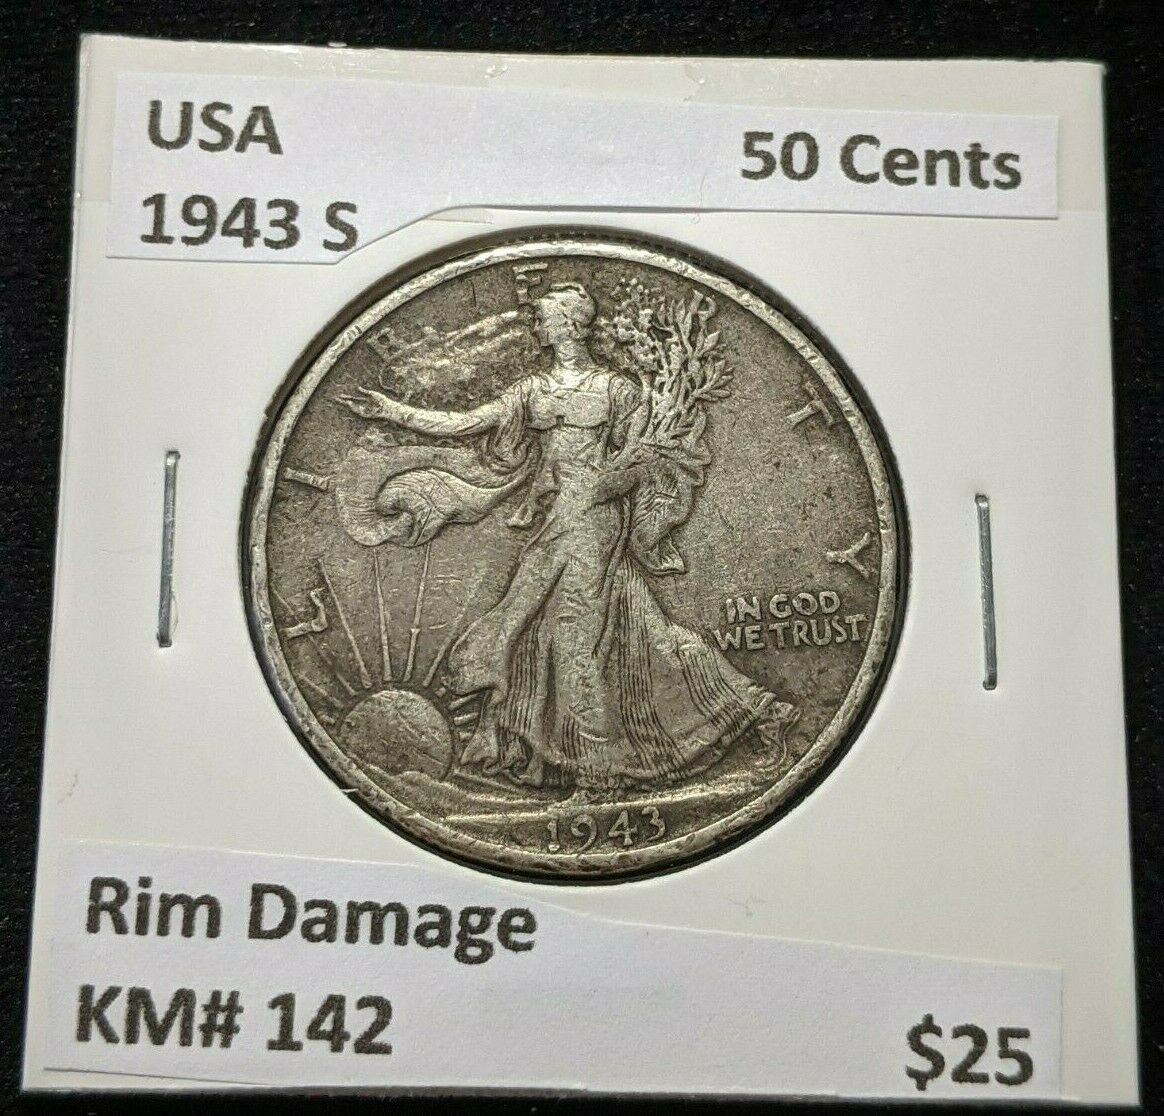 USA 1943 S 50 Cents KM# 142 Rim Damage #087